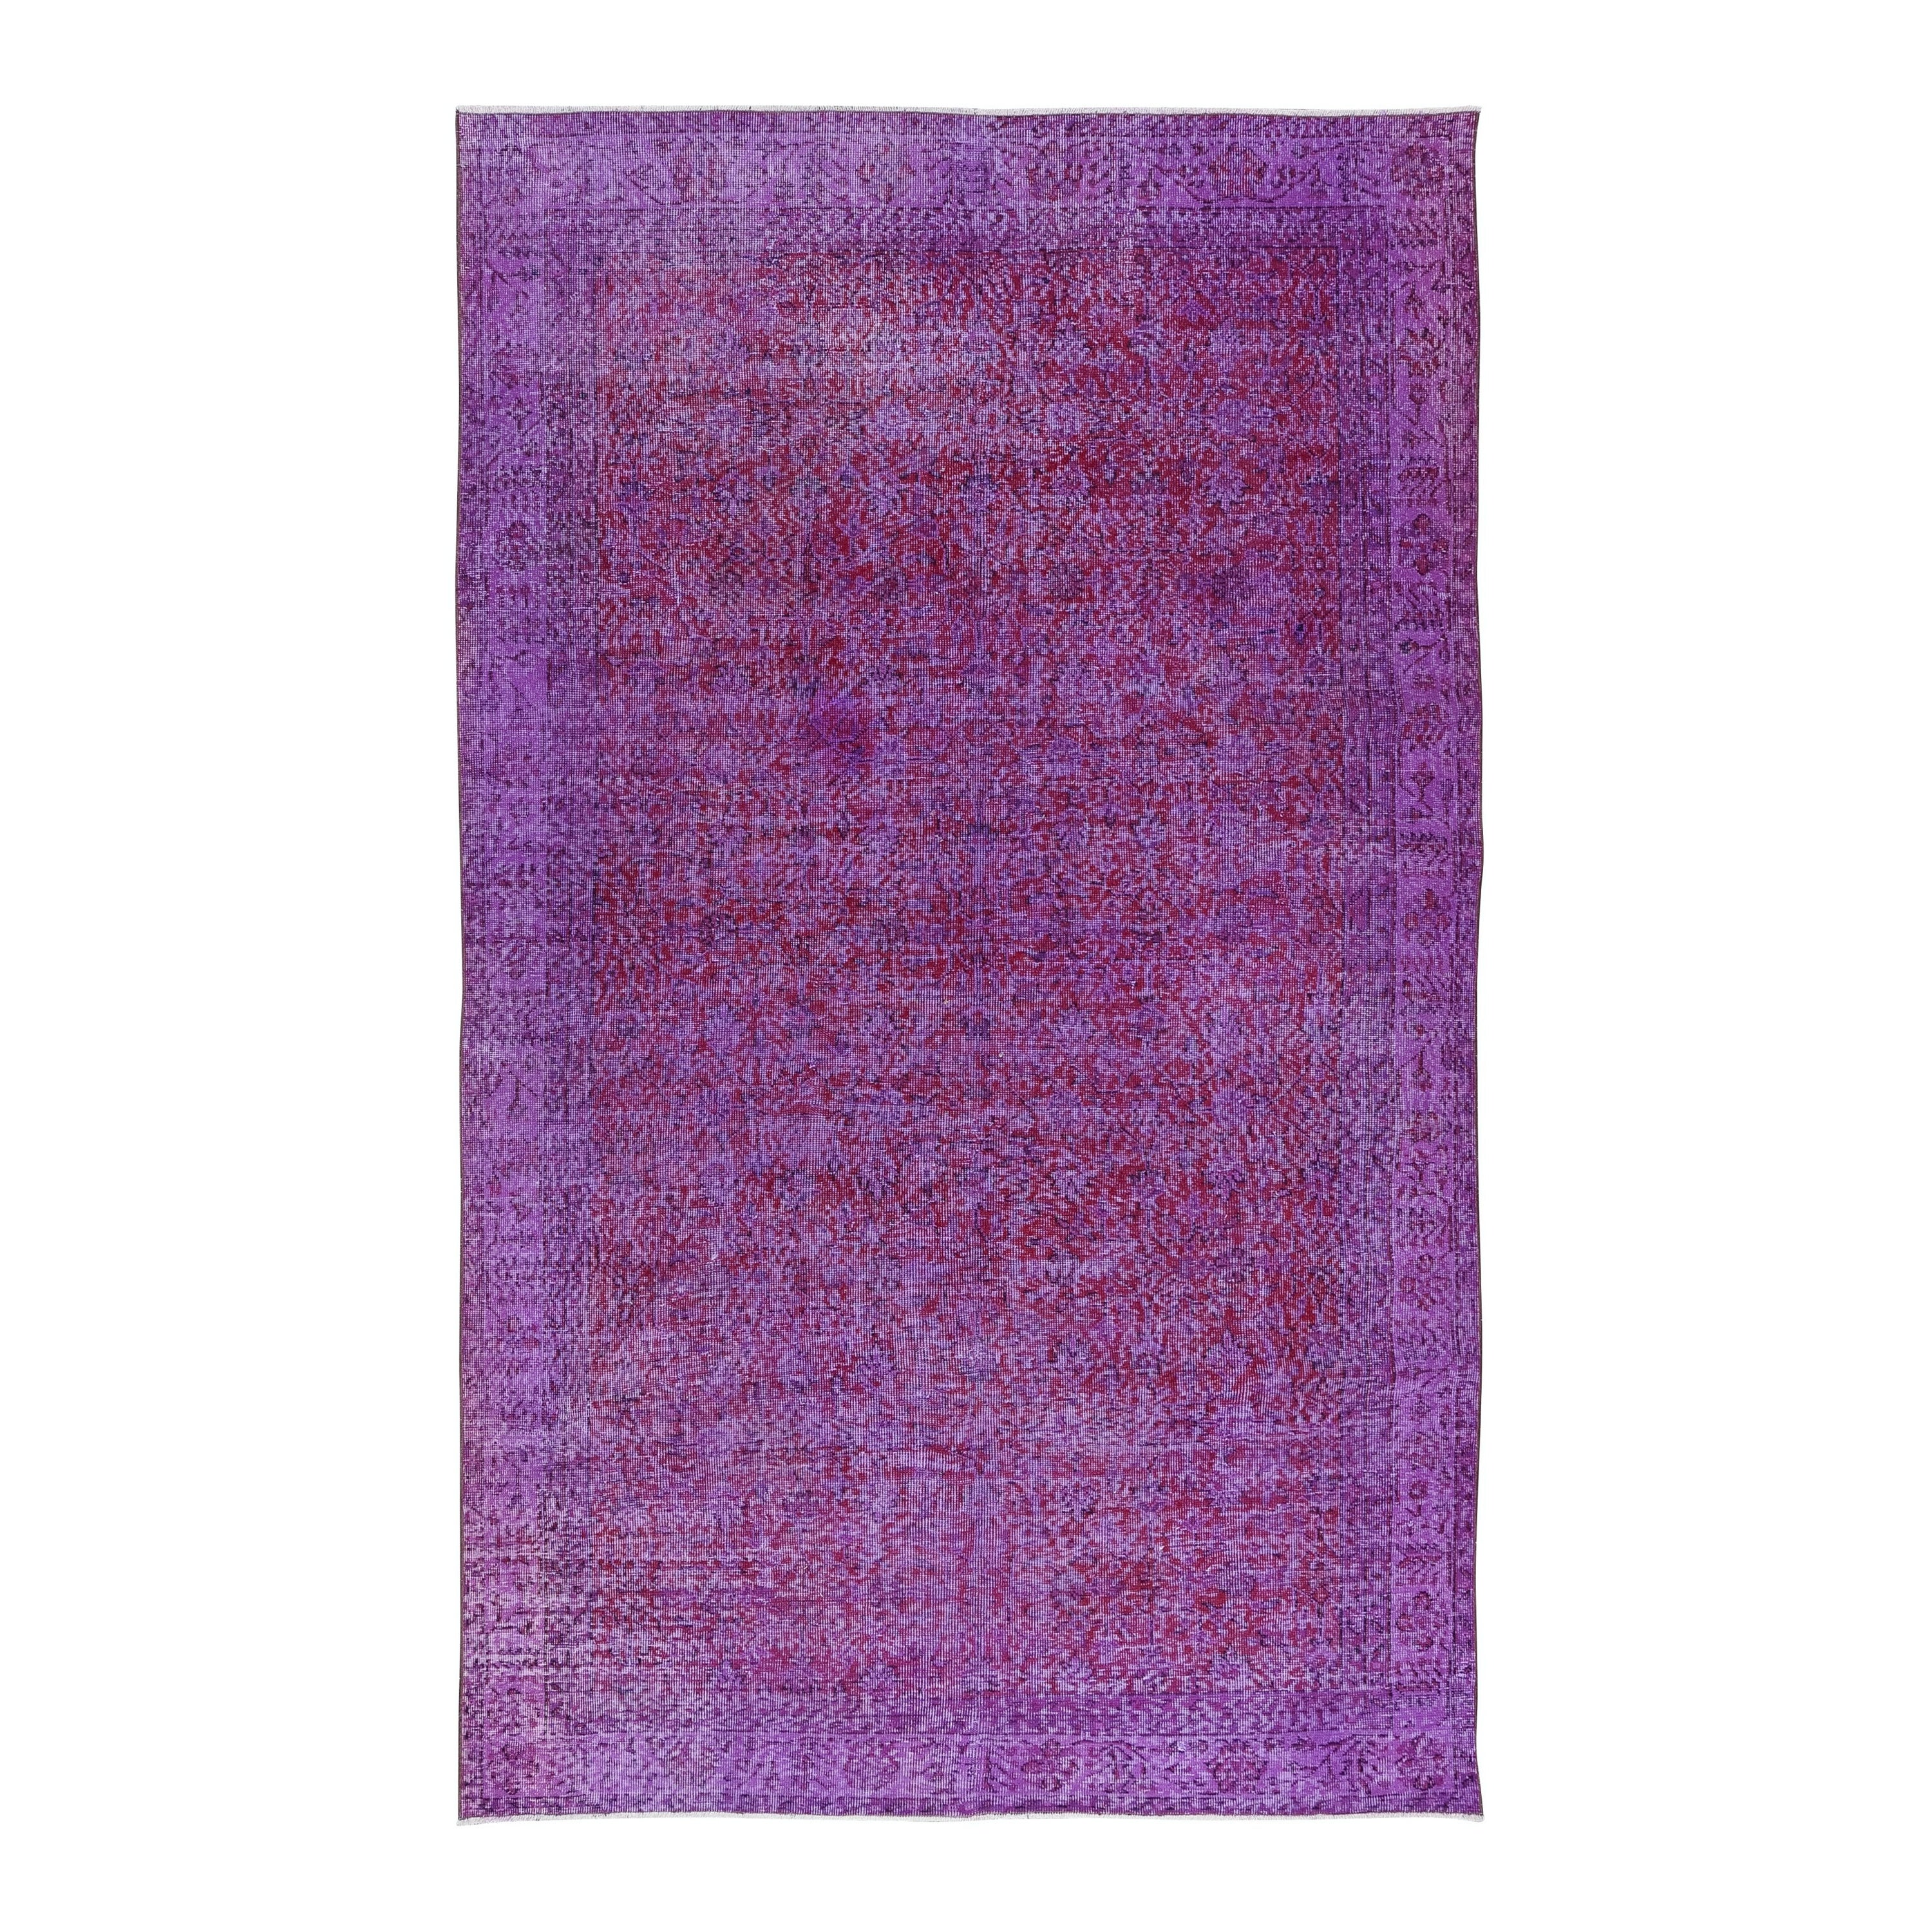 6.4x10.5 Ft Modern Handmade Turkish Sparta Wool Area Rug in Purple